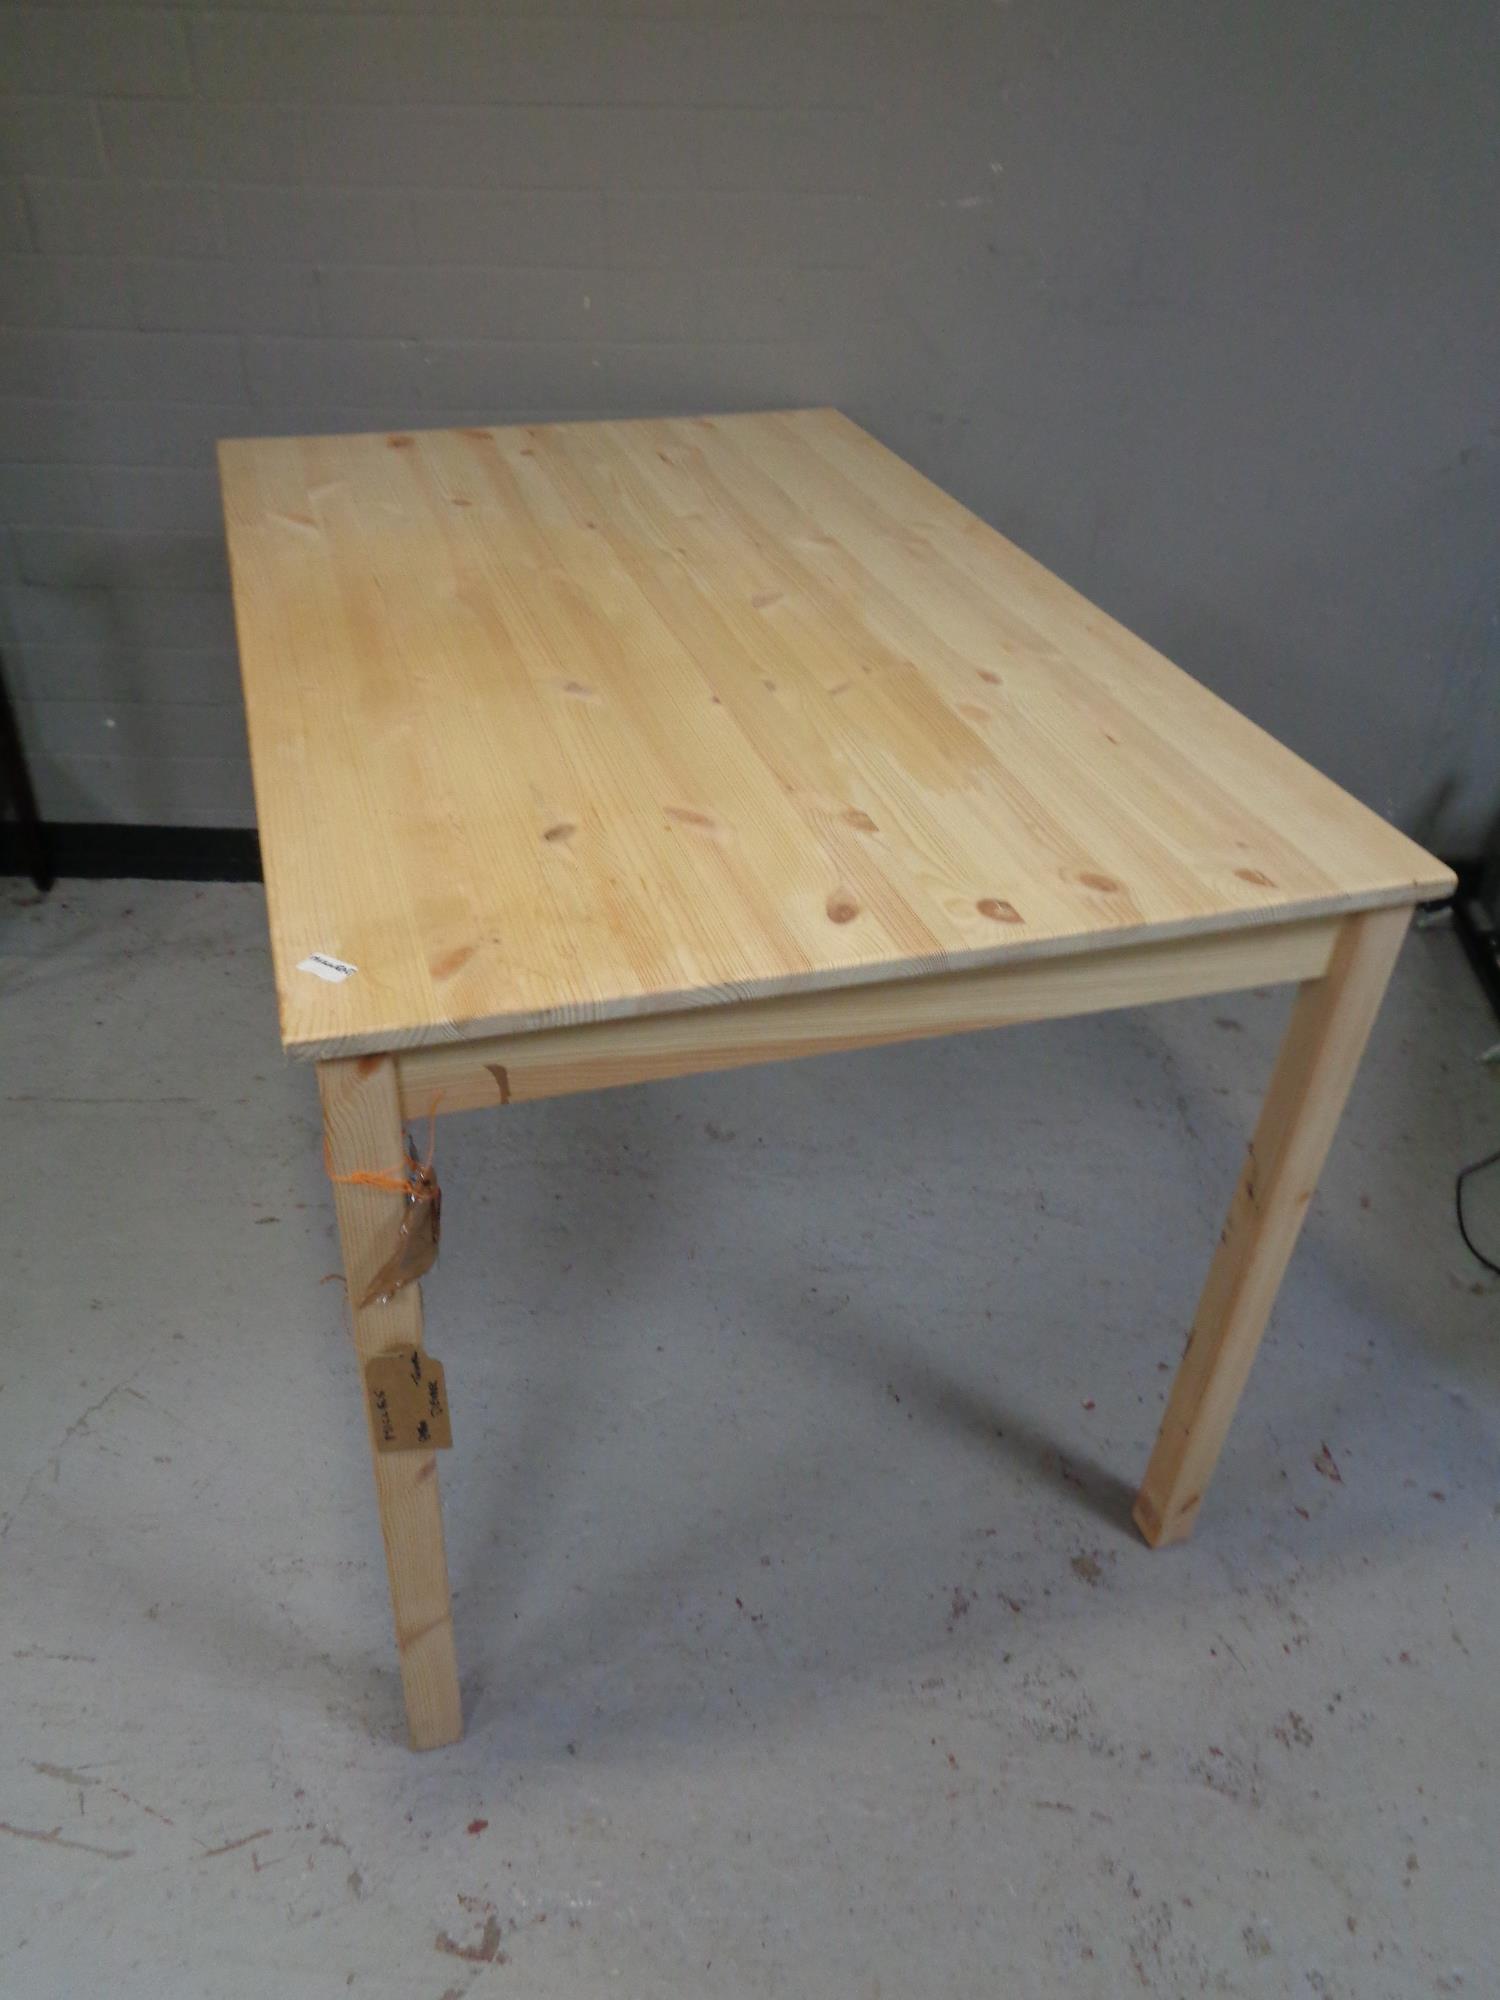 An Ikea pine kitchen table